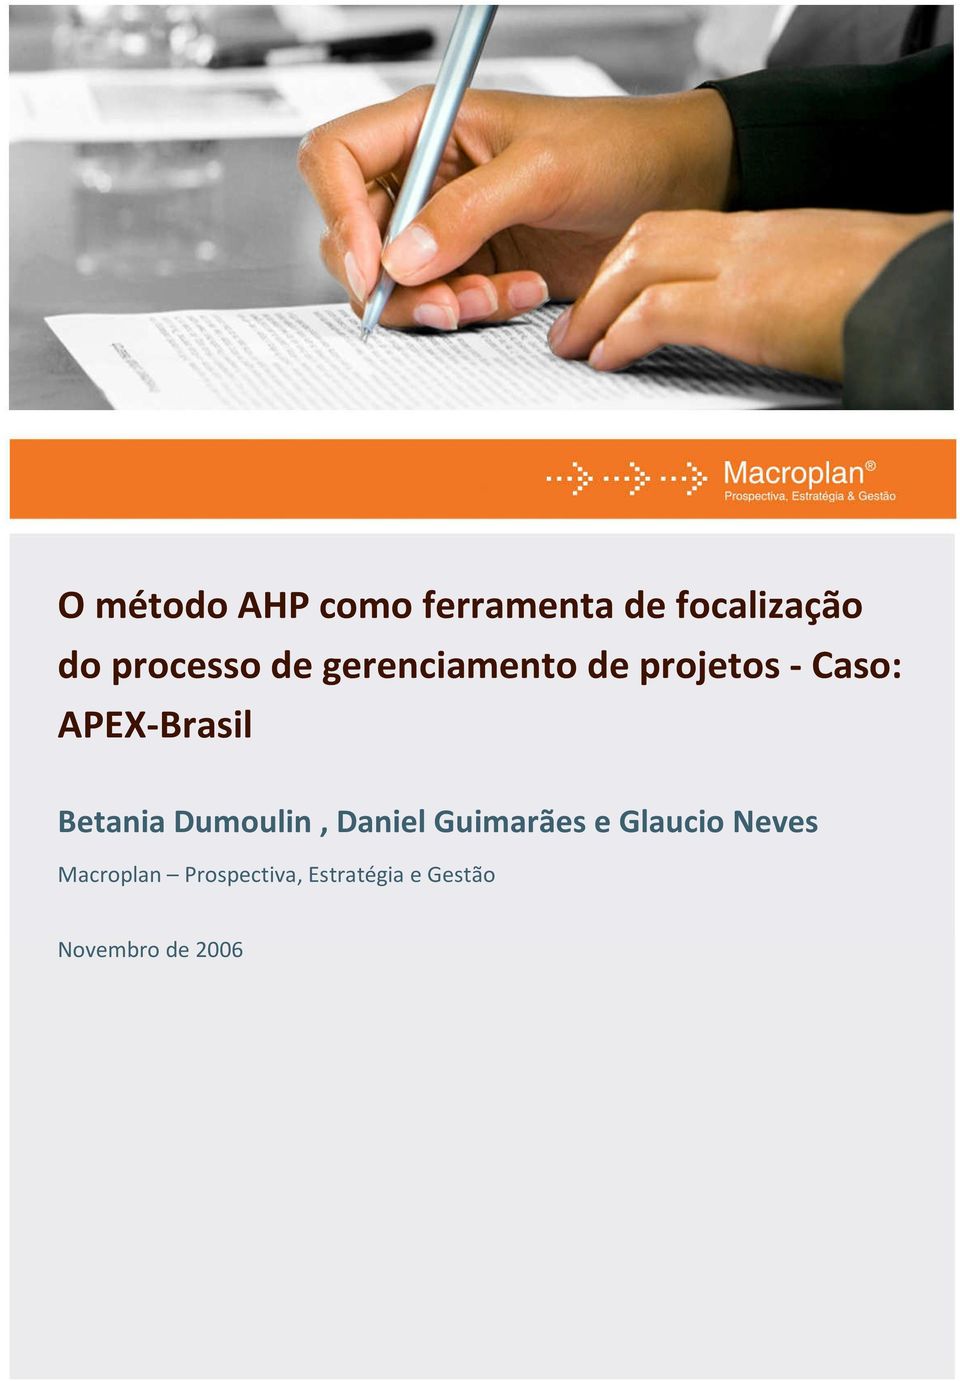 APEX-Brasil Betania Dumoulin, Daniel Guimarães e